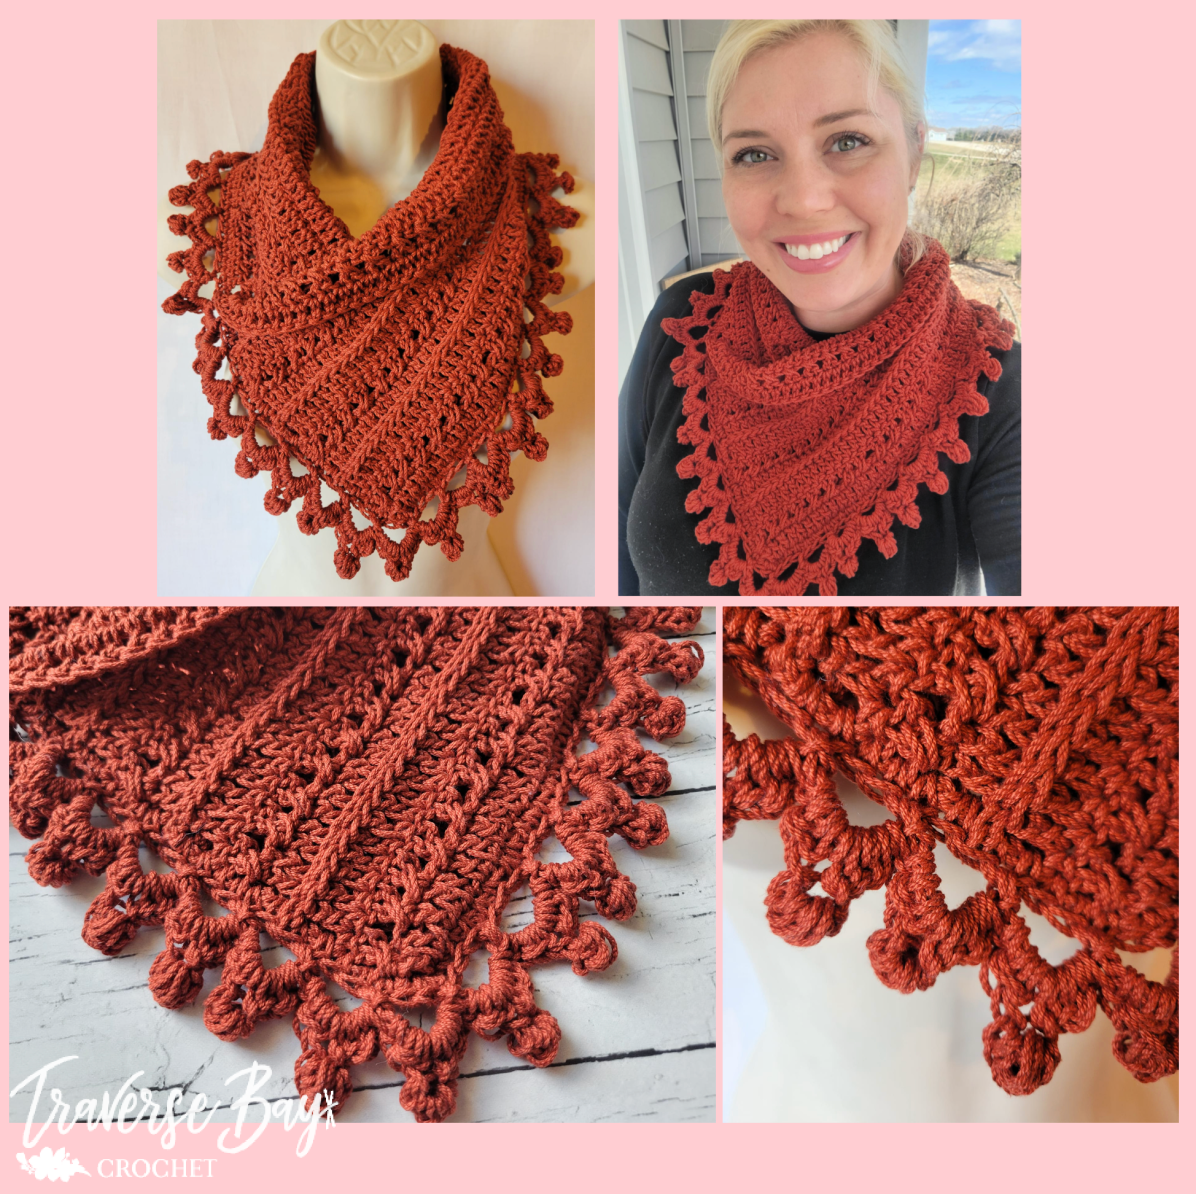 Crochet Slip Stitch Neck Warmer Pattern